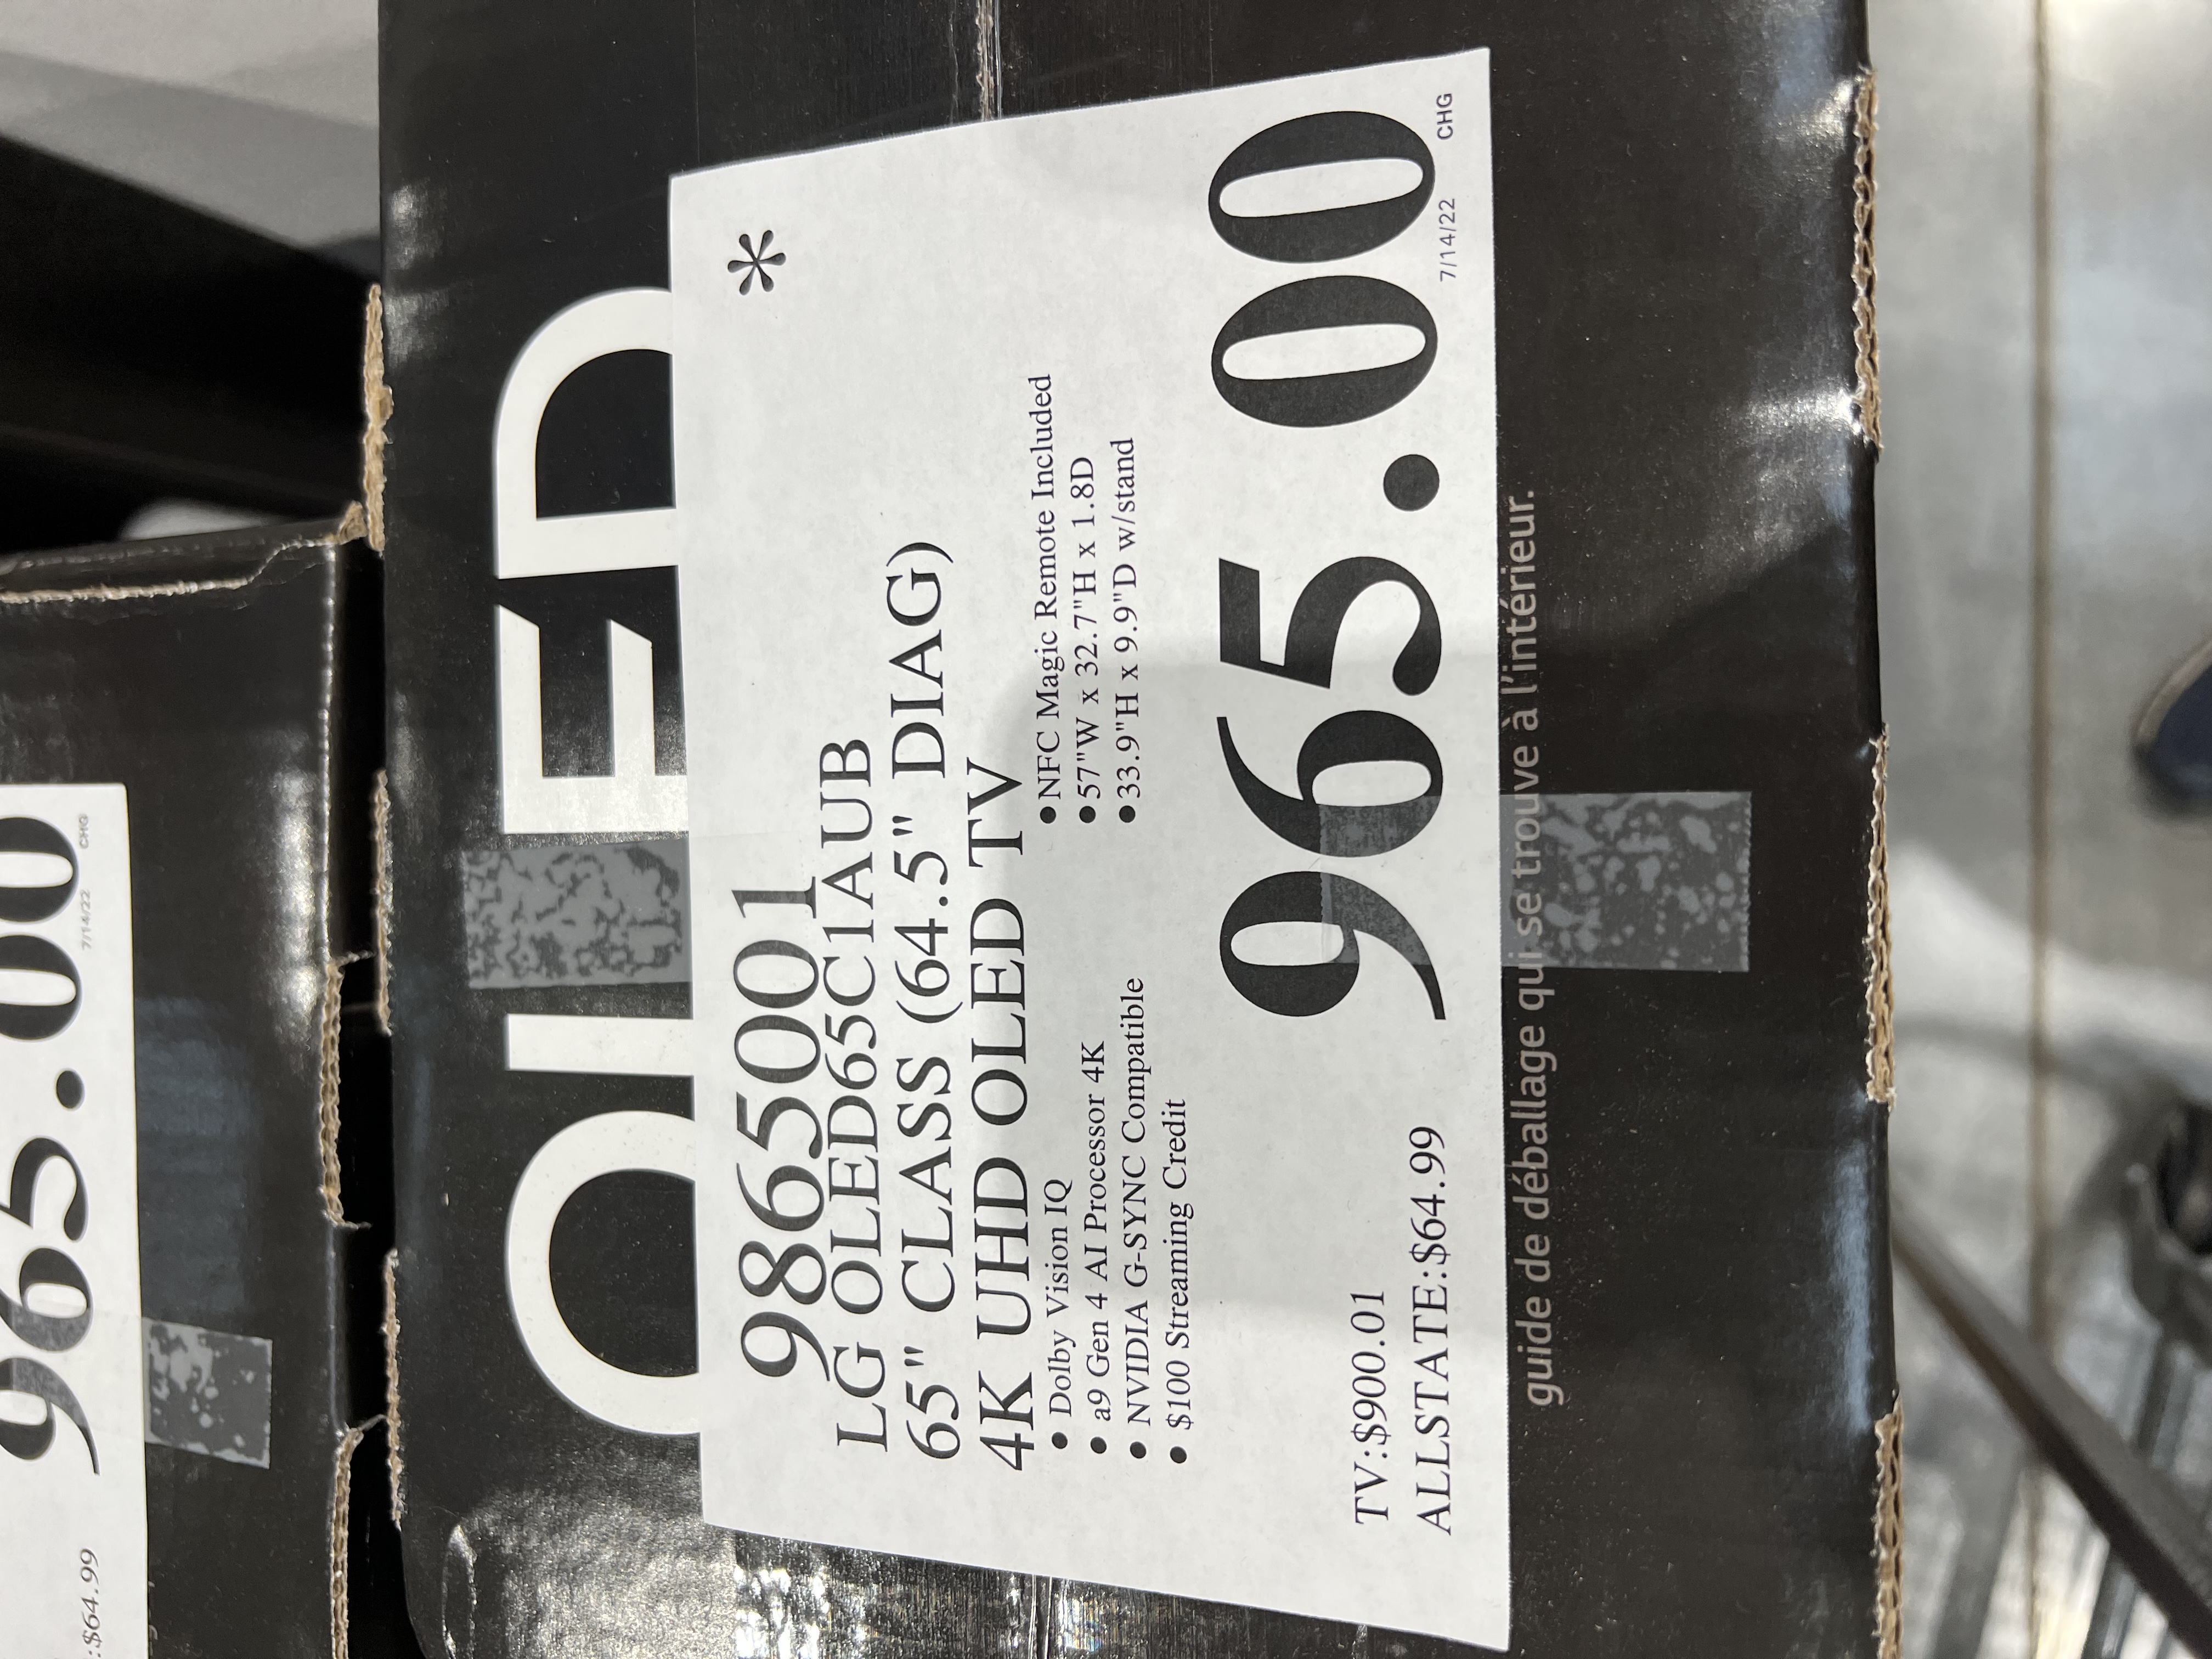 DEAD - YMMV - local Costco clearance - LG 65" Class - C1 Series - 4K UHD OLED TV -  - $900.01